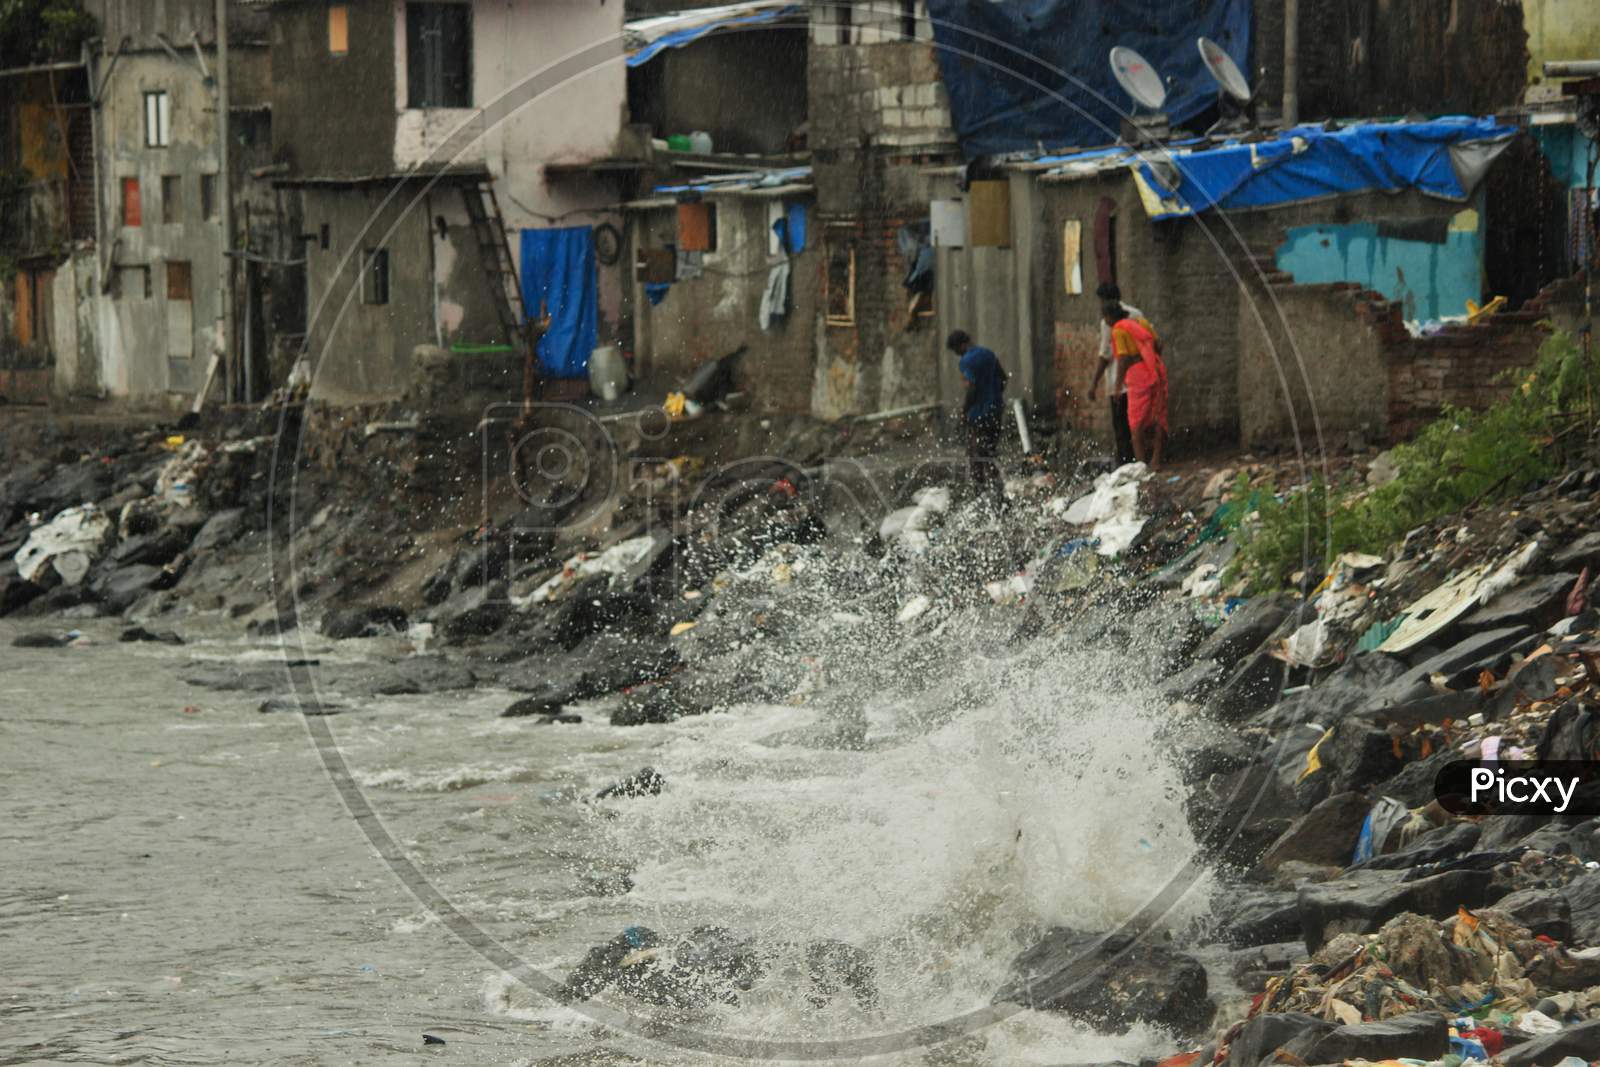 Sea waves strike at a slum area near the Arabian sea as cyclone Nisarga makes its landfall on the outskirts of the city, in Mumbai, India, June 3, 2020.